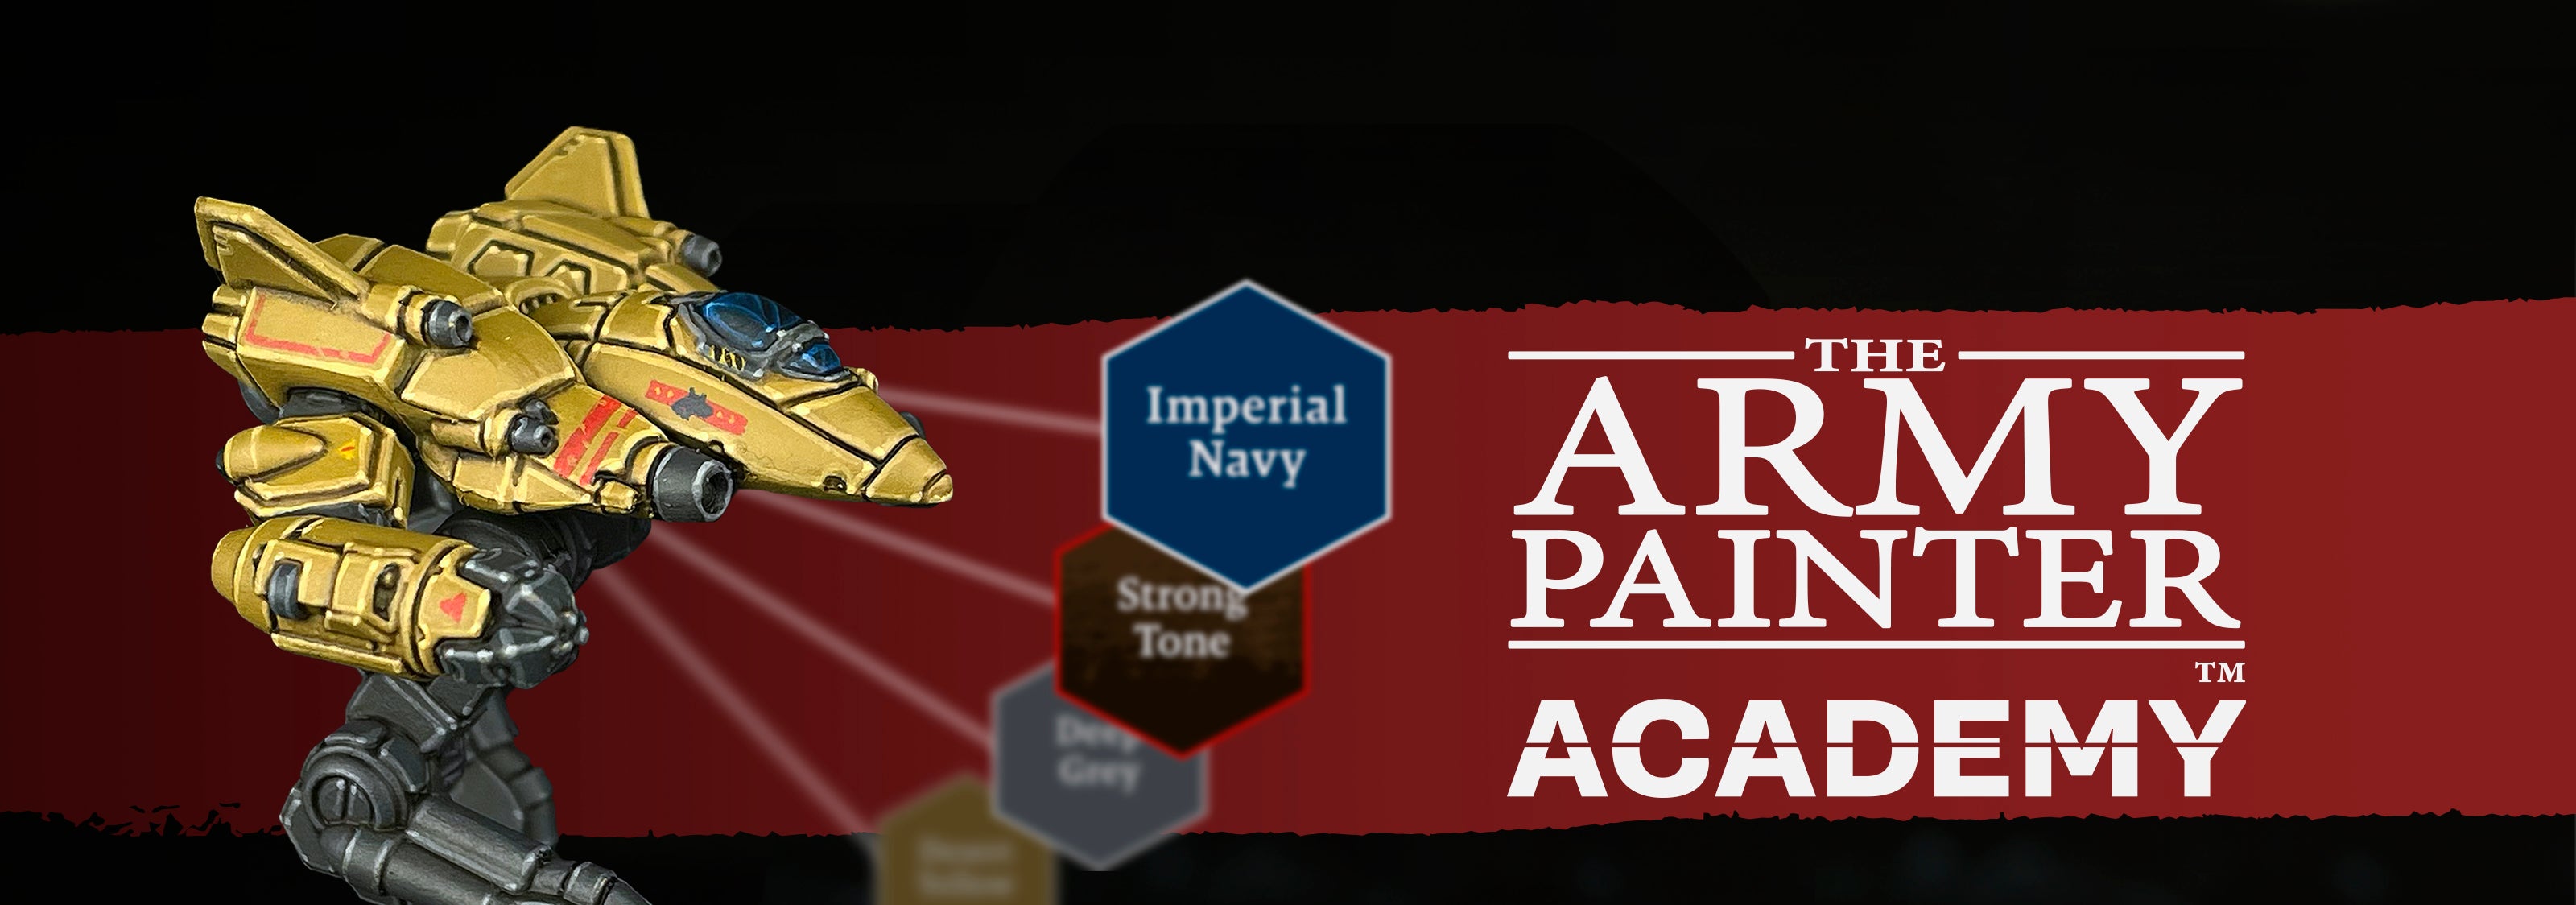 The Army Painter Academy Battletech